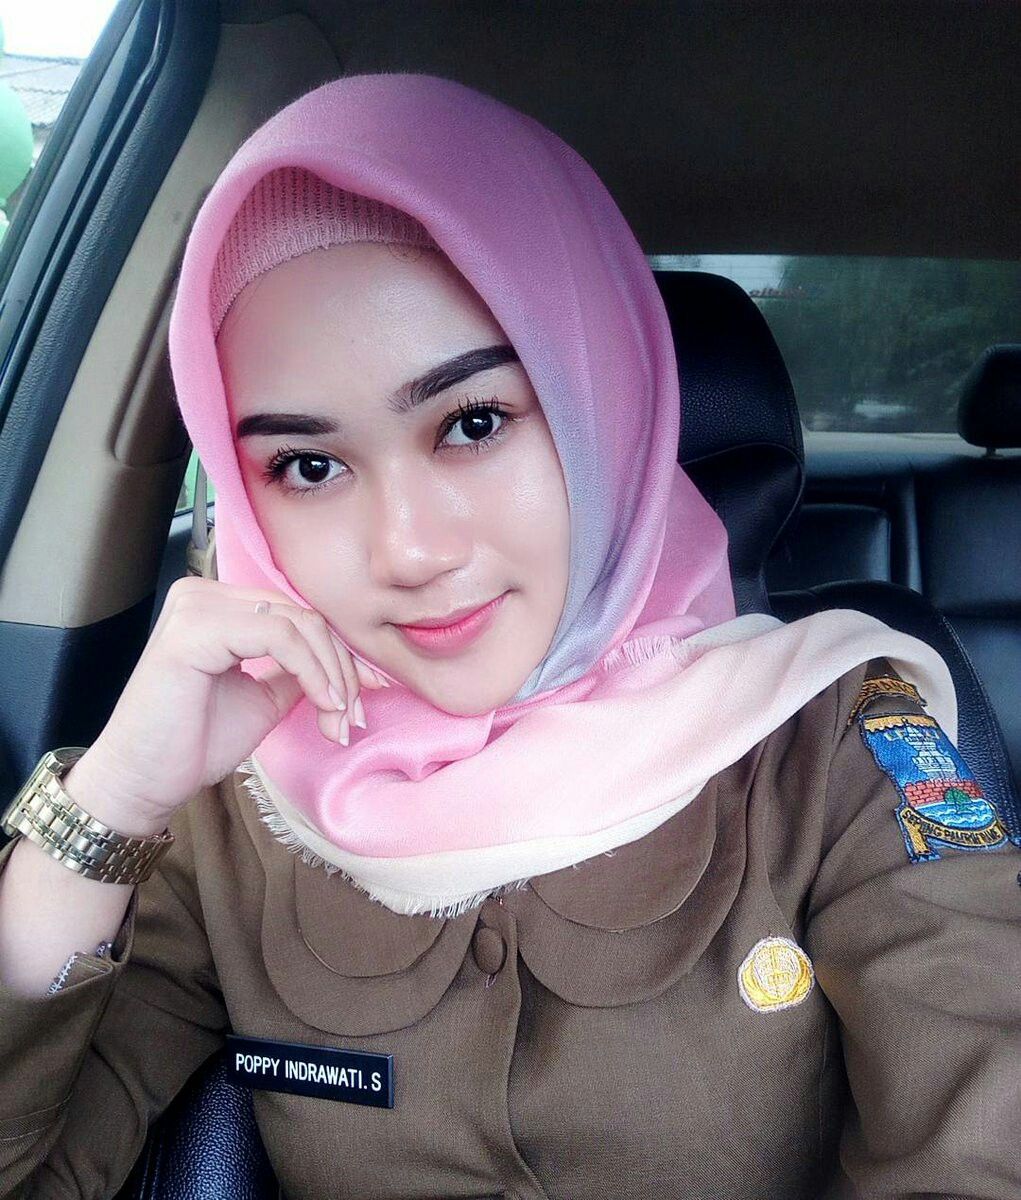 Bokep jilbab cantik. Индонезийки в хиджабе. PNS Jilbab. Indonesia Hijab girls.